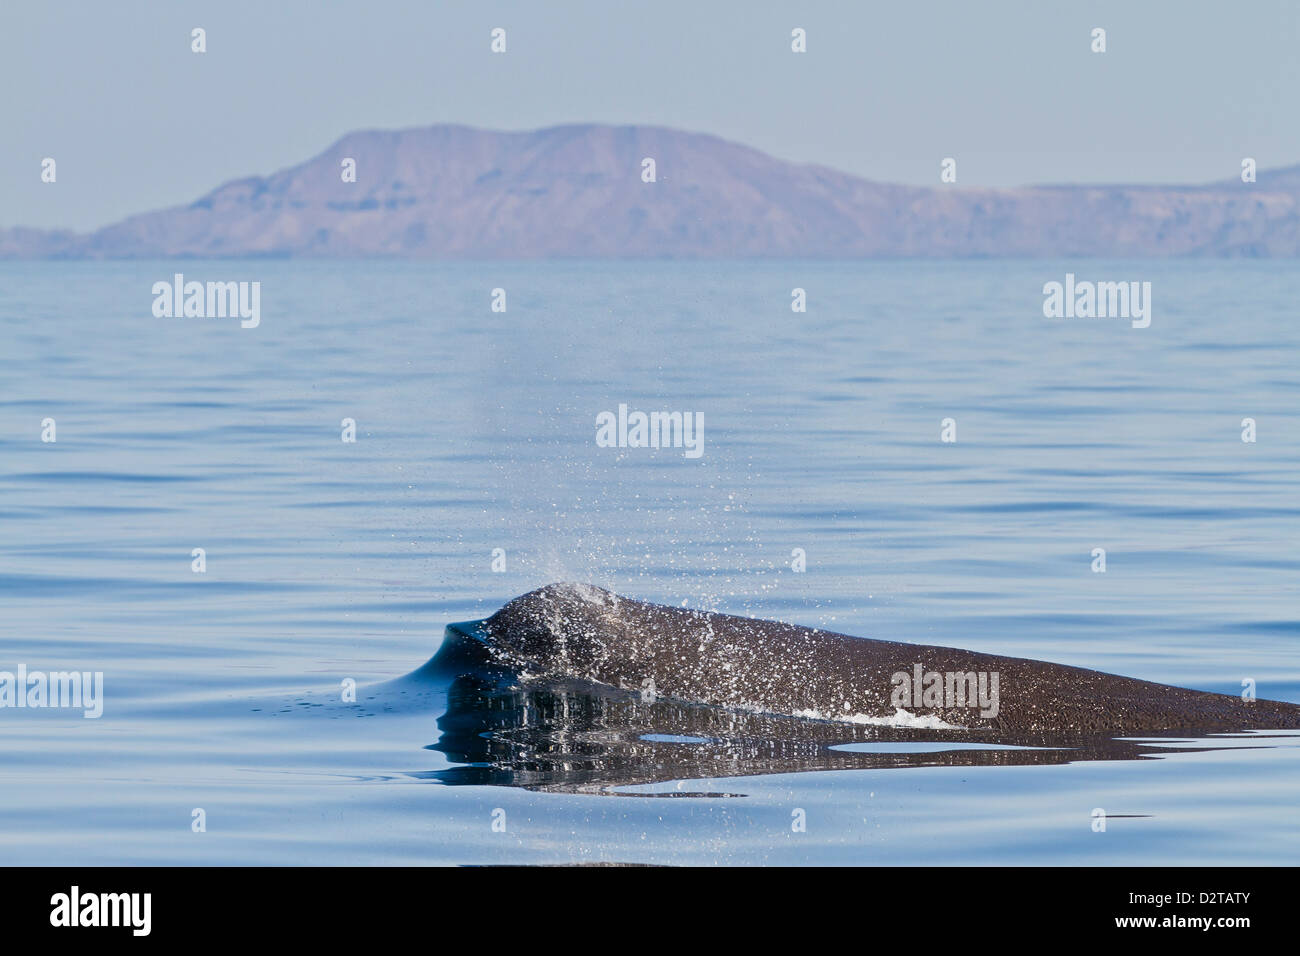 Sperm whale surfacing, Isla San Pedro Martir, Gulf of California (Sea of Cortez), Baja California Norte, Mexico Stock Photo